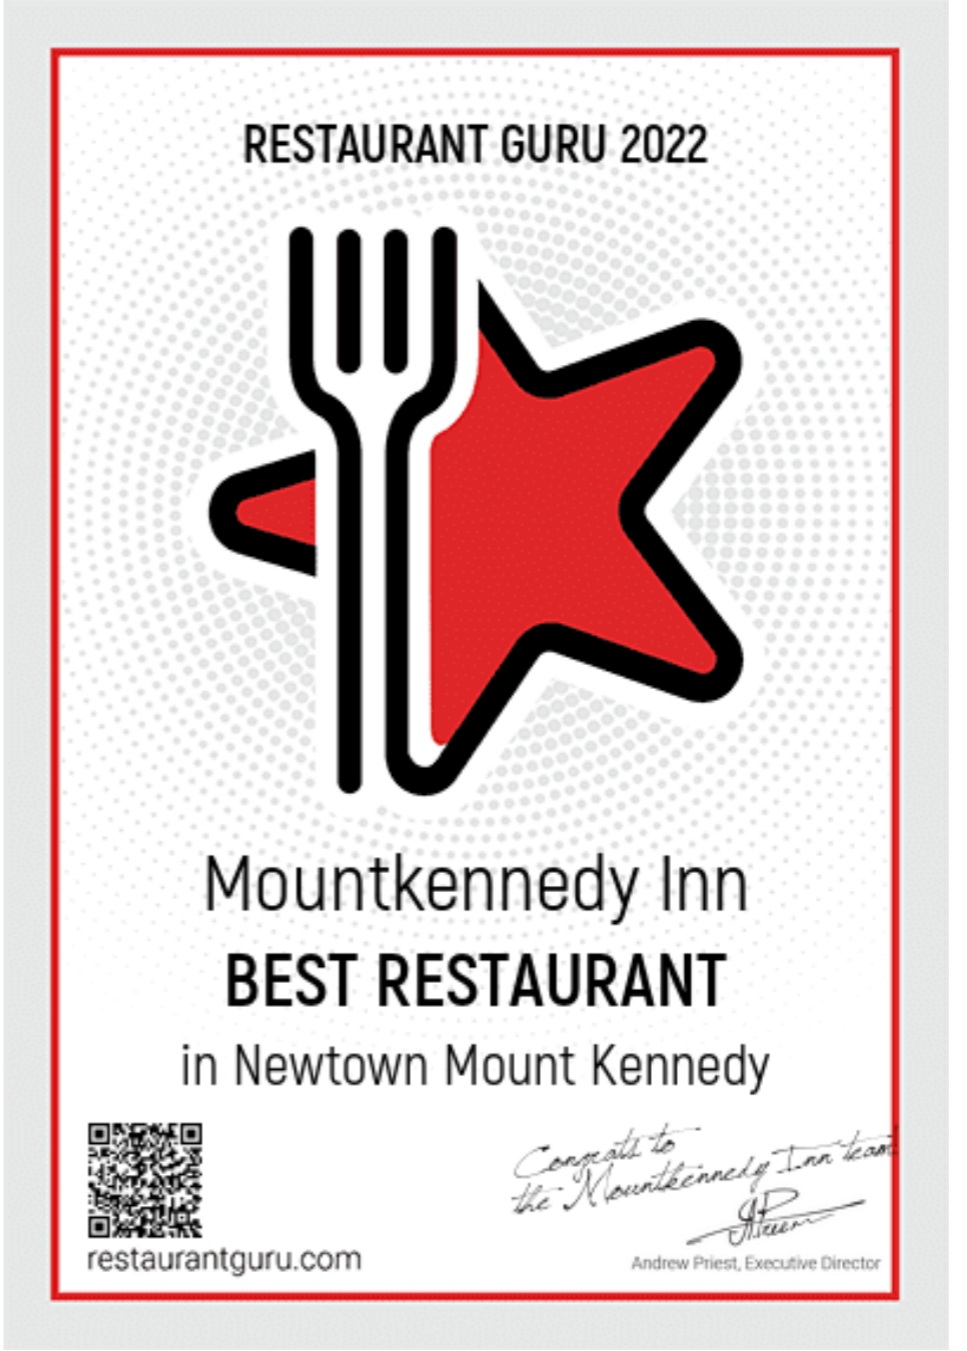 Restaurant Guru food award